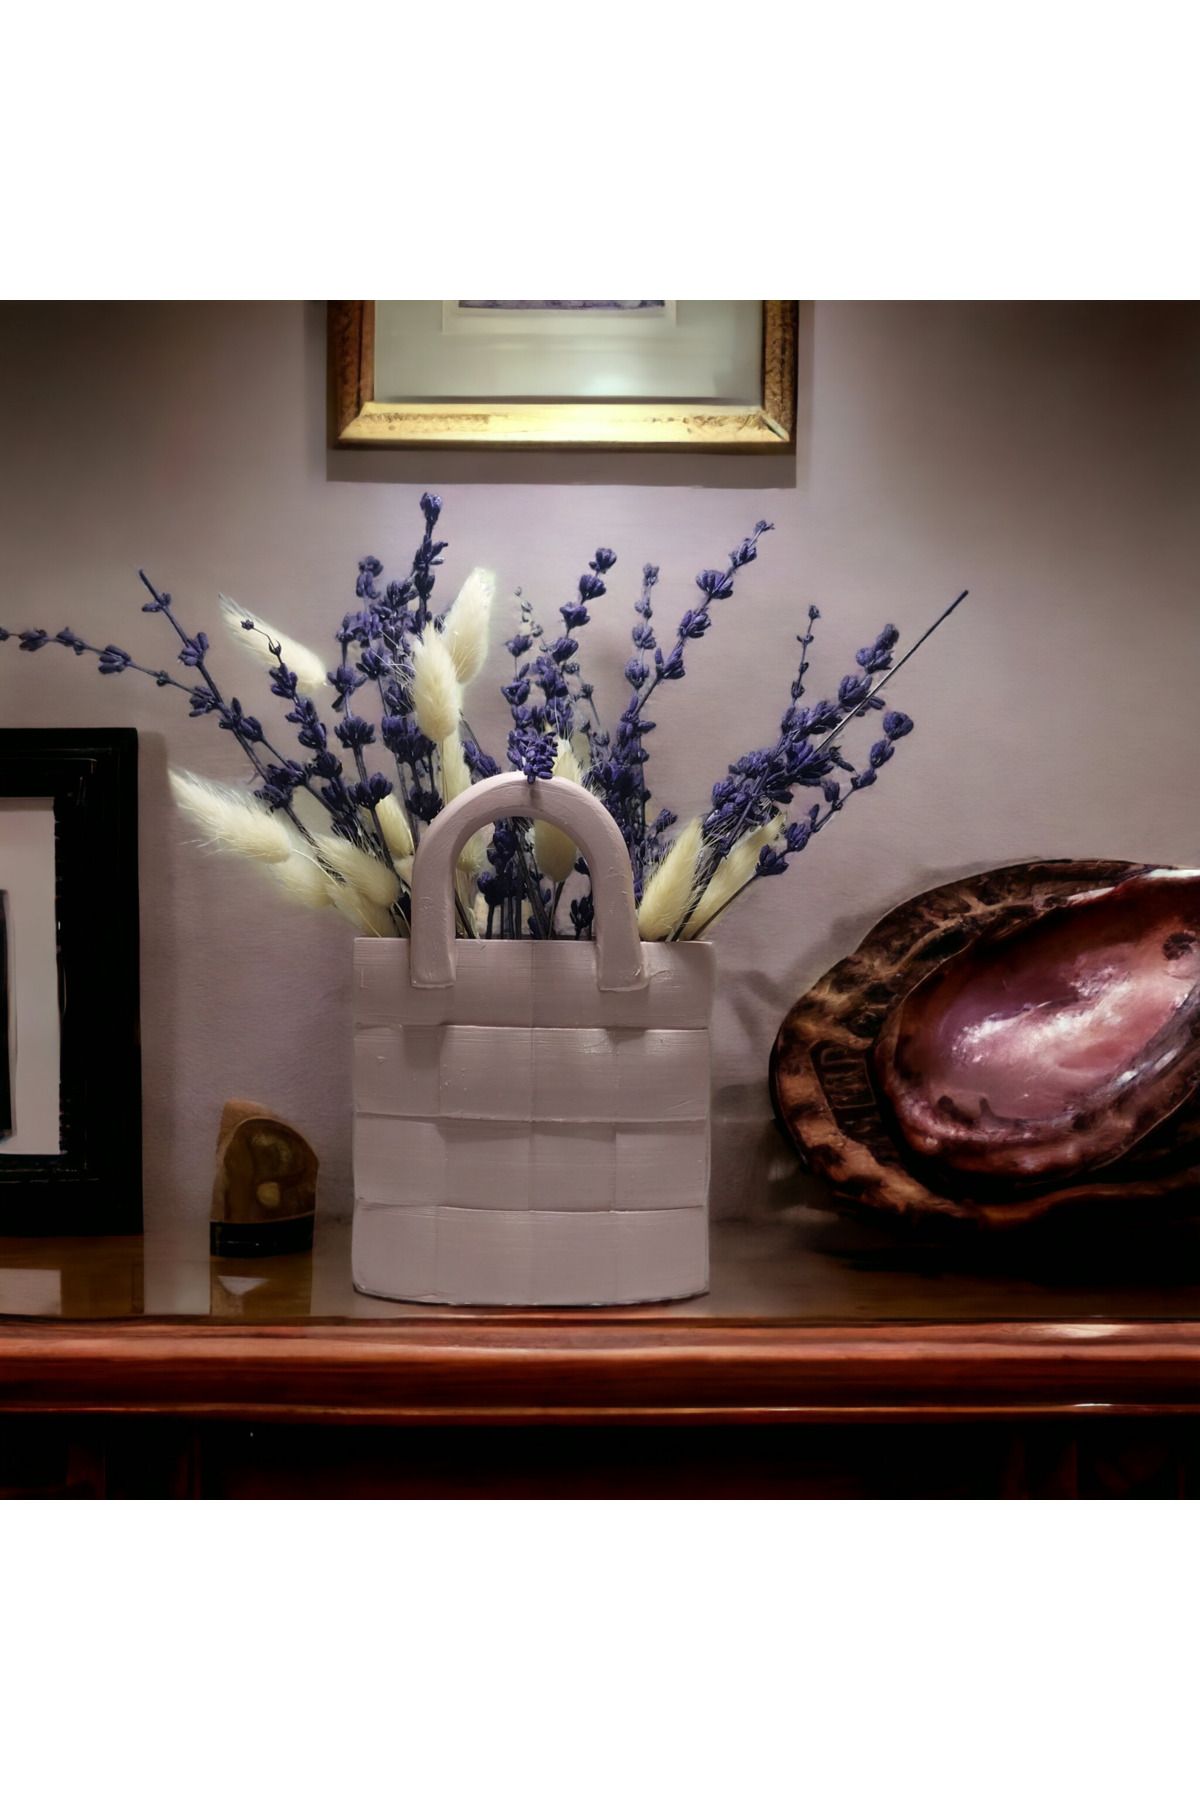 ddecco Çanta vazo yeni model dekoratif aksesuar, biblo,vazo,hediyelik,dekorasyon